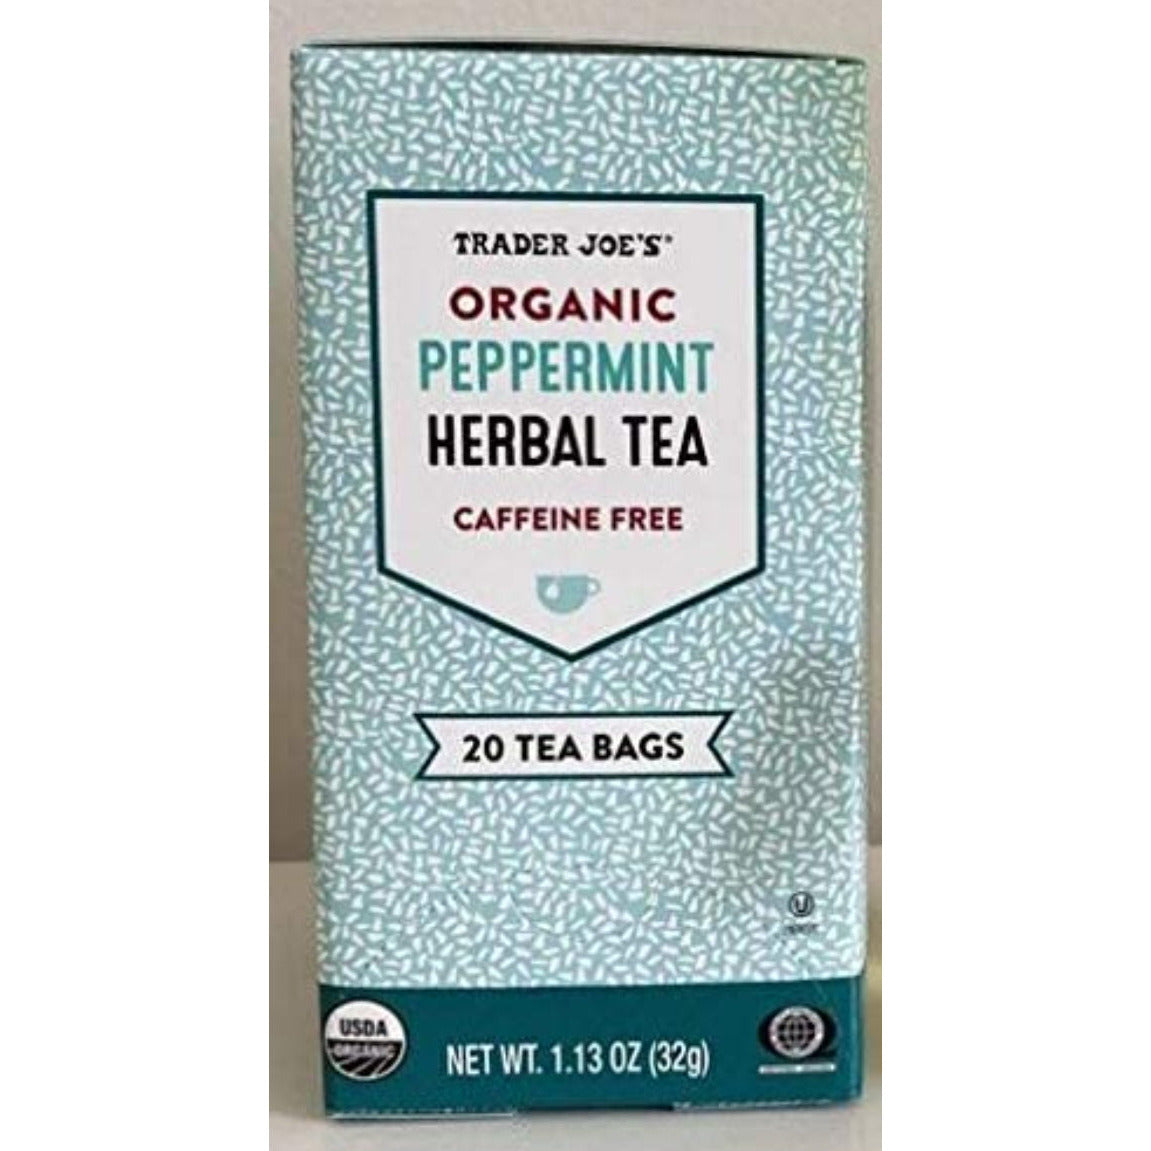 Trader Joe's Organic Peppermint Herbal Tea, 20 bags